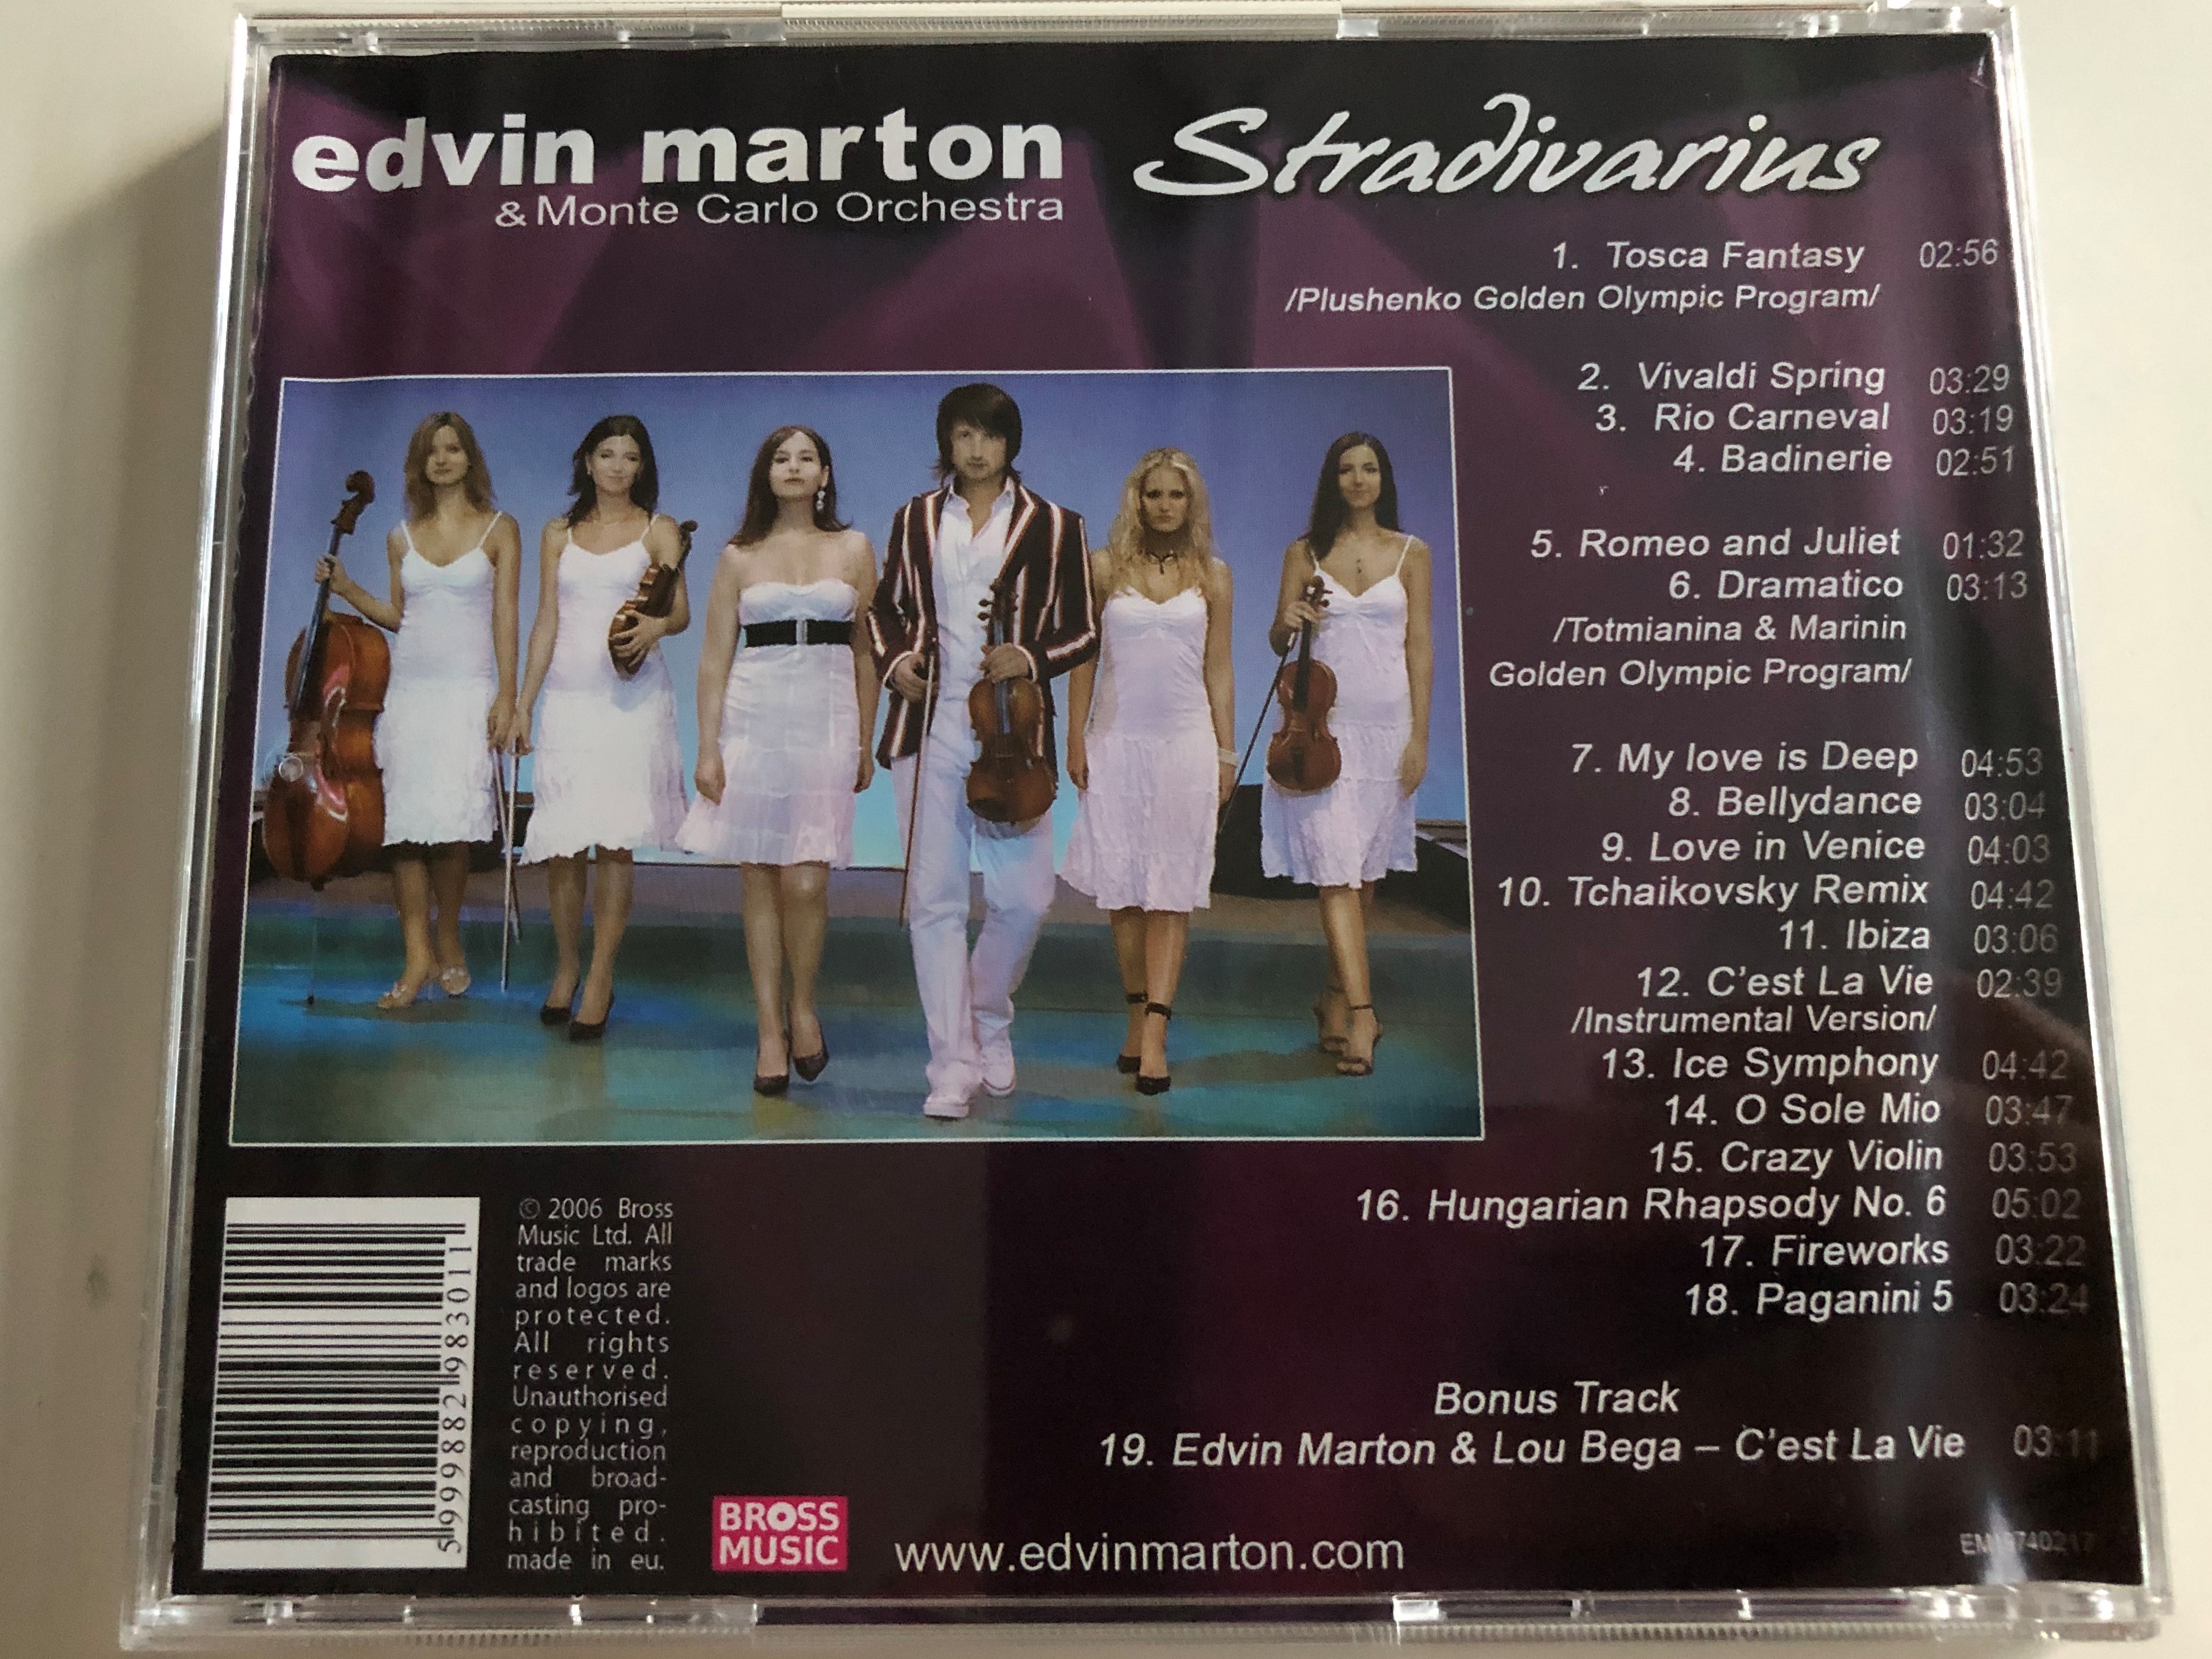 edvin-marton-monte-carlo-orchestra-stradivarius-tosca-fantasy-vivaldi-spring-romeo-and-juliet-my-love-is-deep-ibiza-o-sole-mio-hungarian-rhapsody-no.6-audio-cd-2006-bross-music-8-.jpg